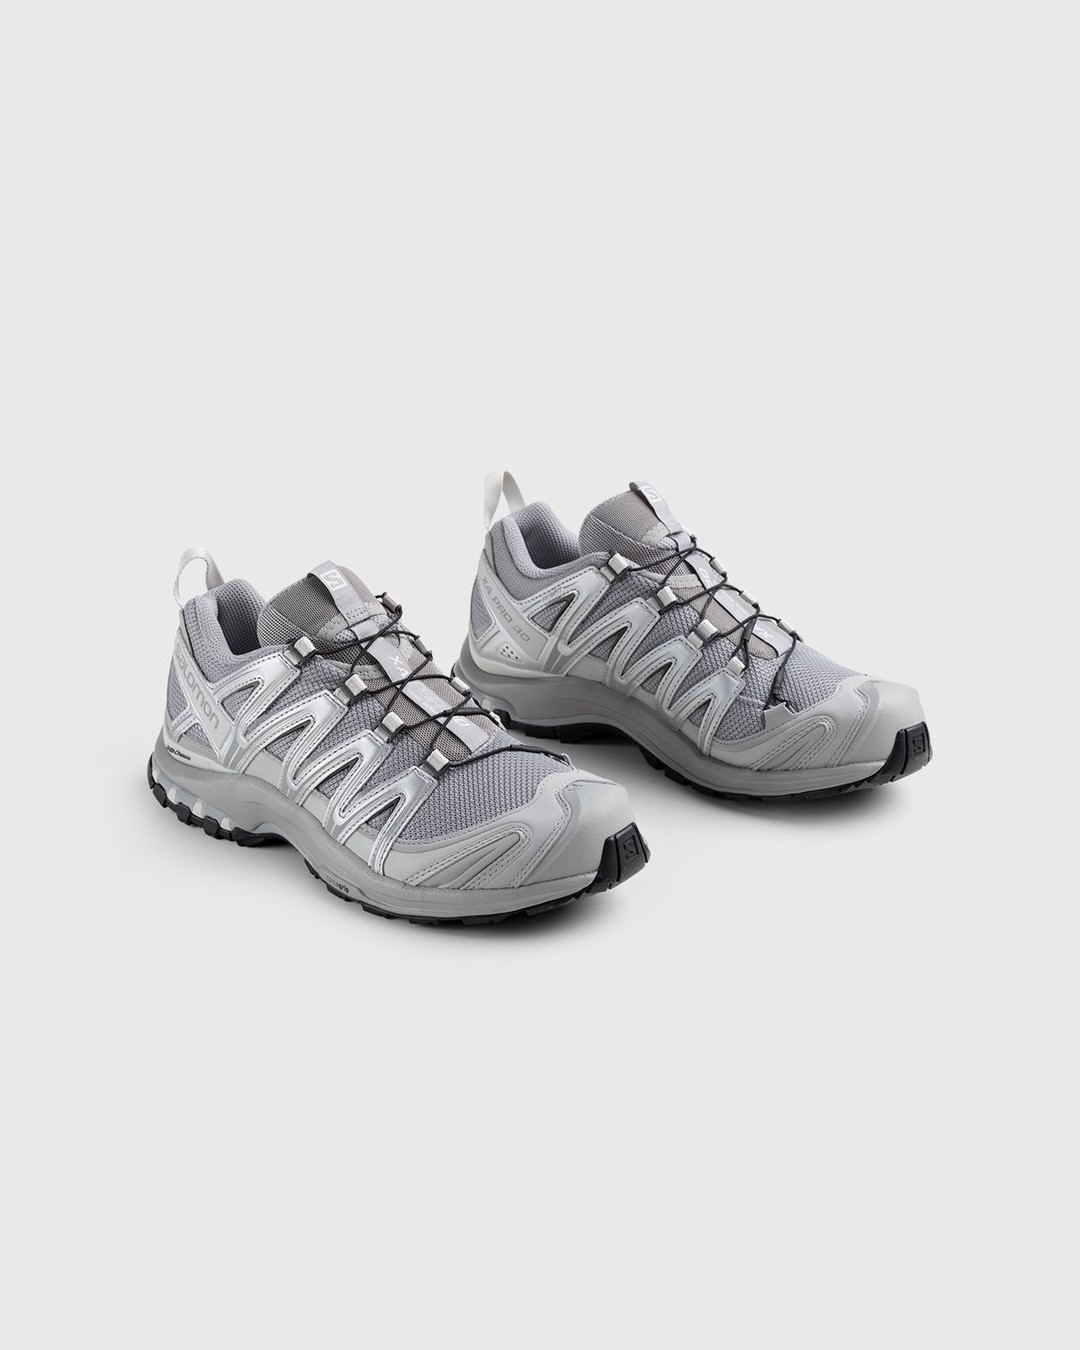 Salomon – XA Pro 3D Alloy/Silver/Lunar Rock - Low Top Sneakers - White - Image 4